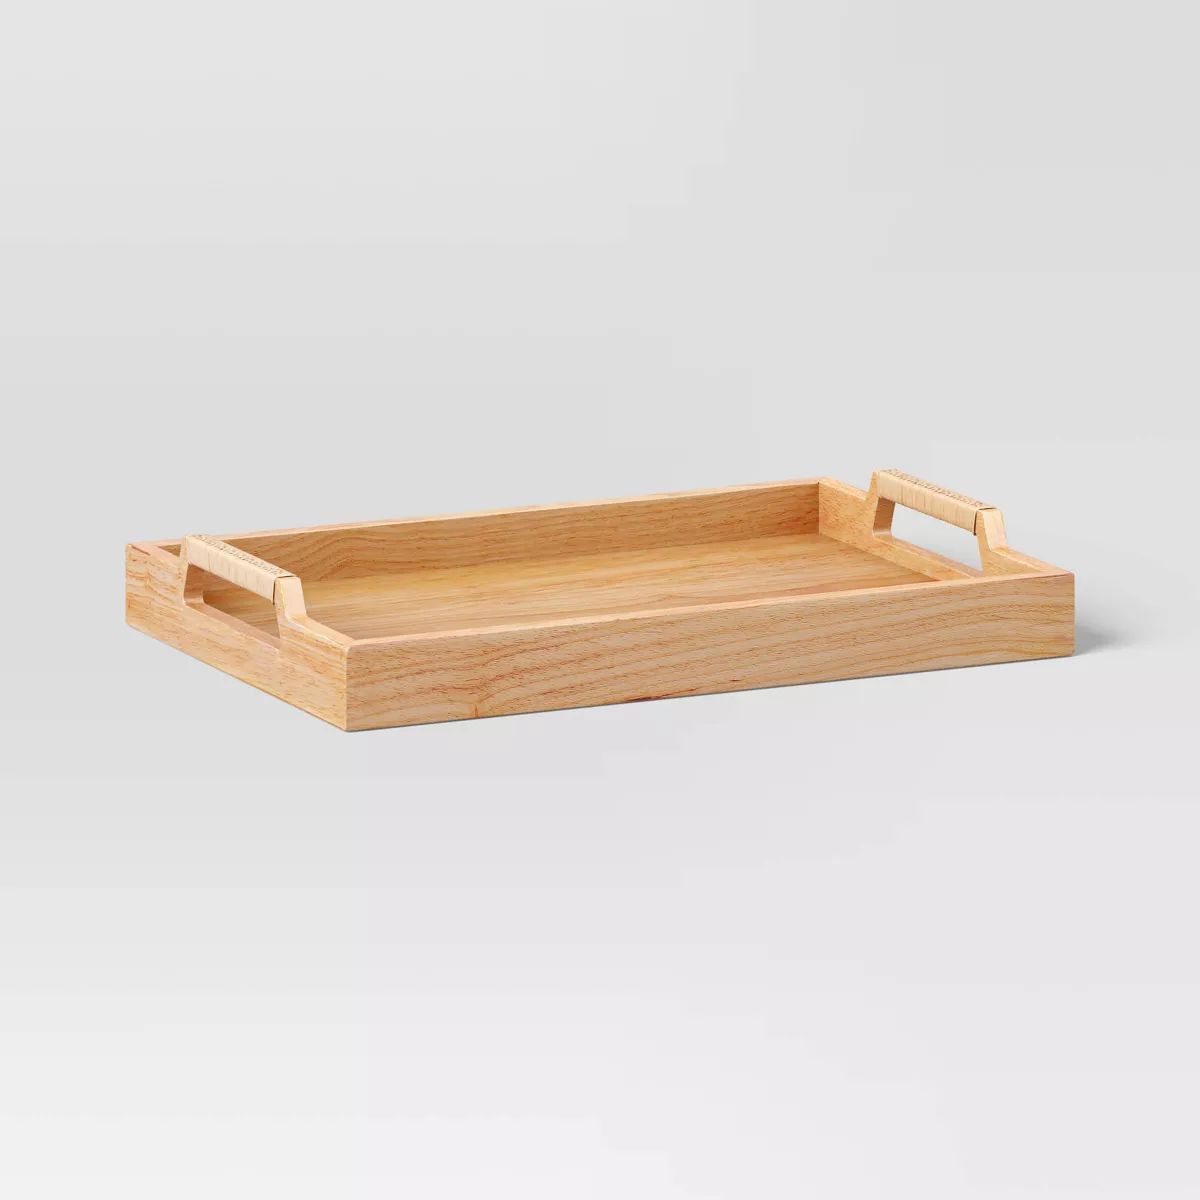 Decorative Wood Tray - Threshold™ | Target